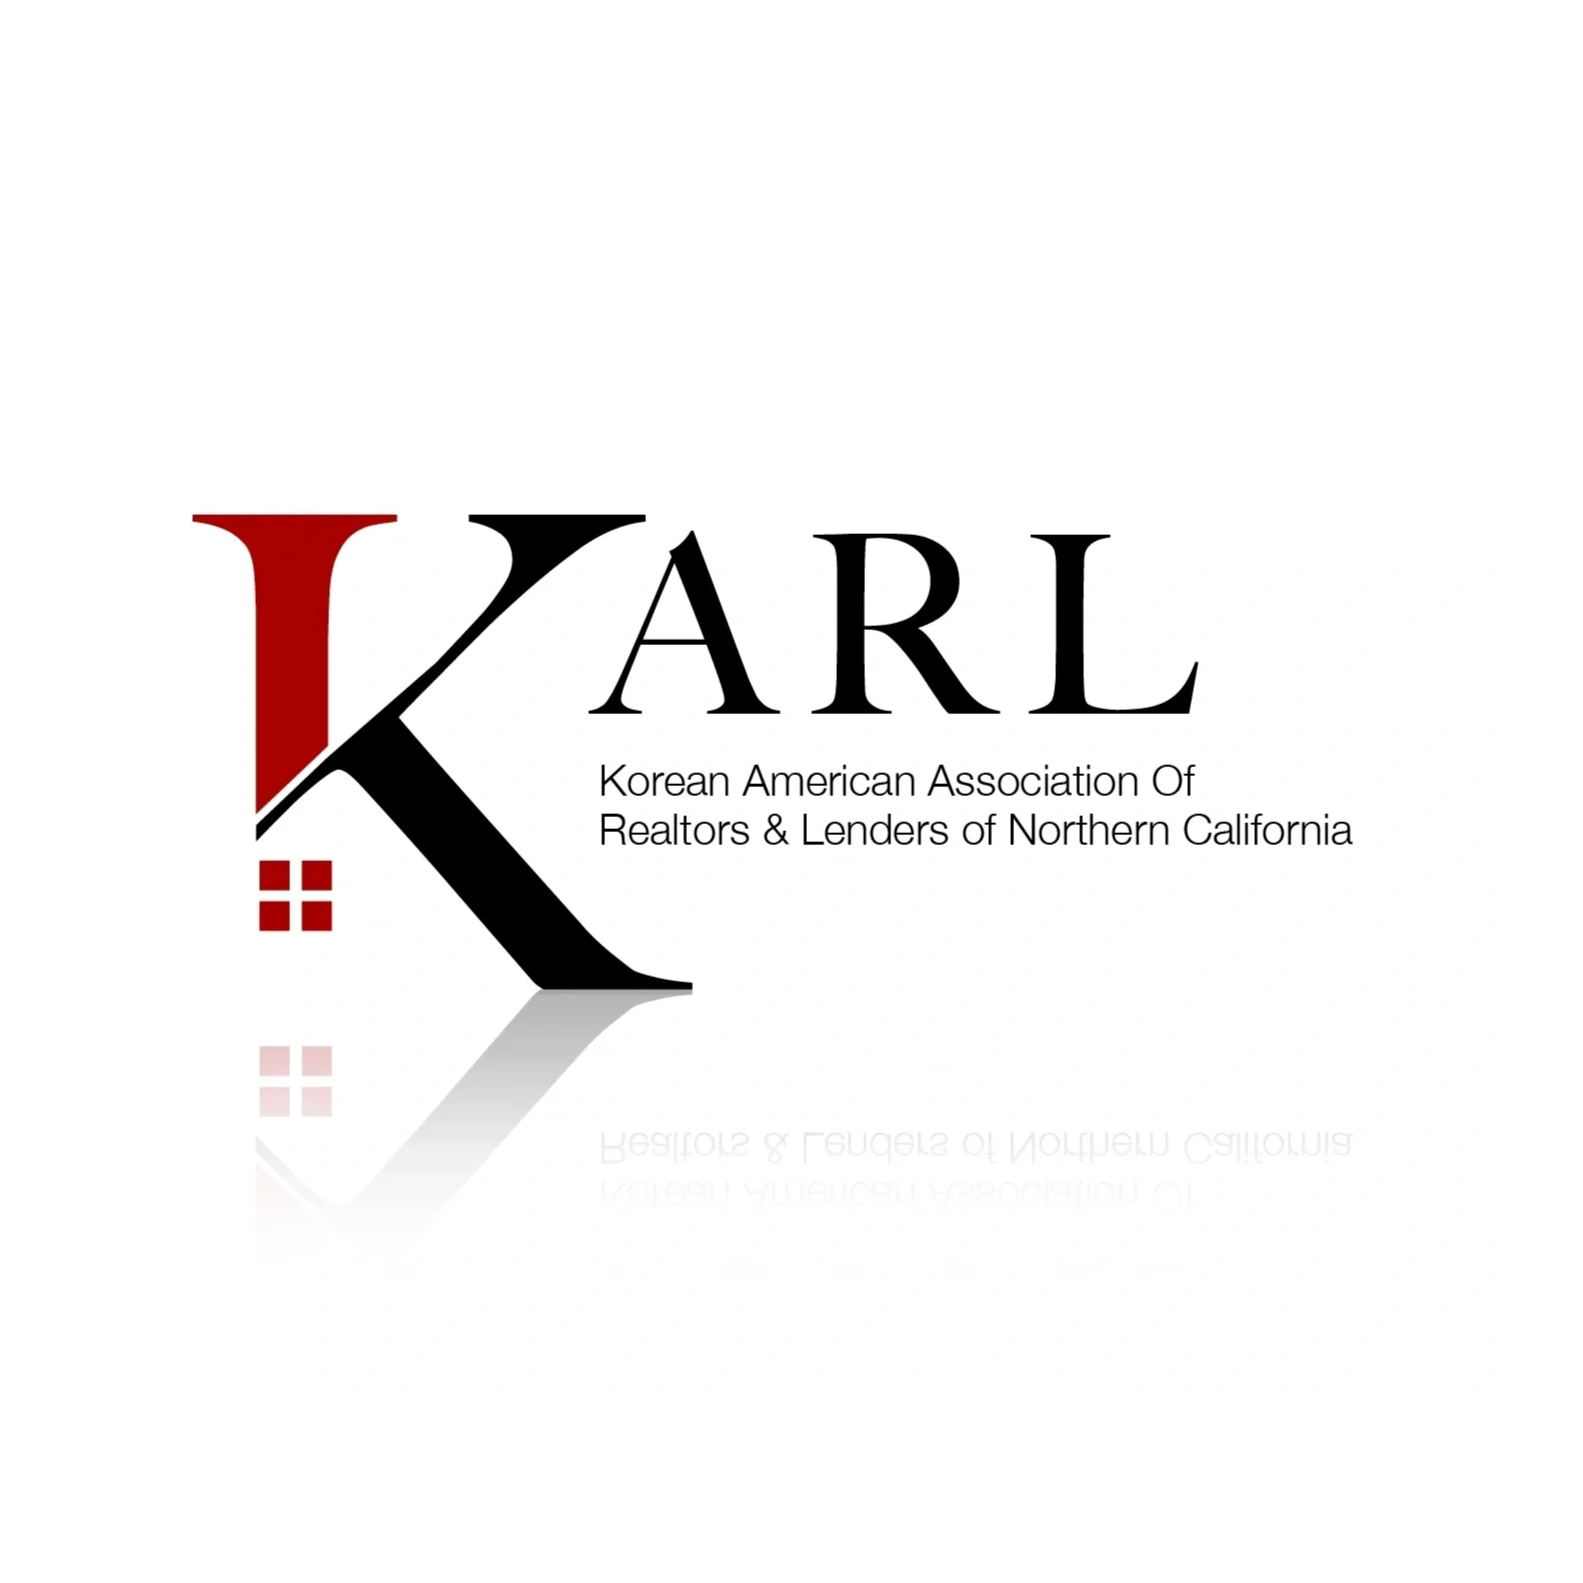 Korean Real Estate Organization in USA - Korean American Association of Realtors and Lenders of Northern California